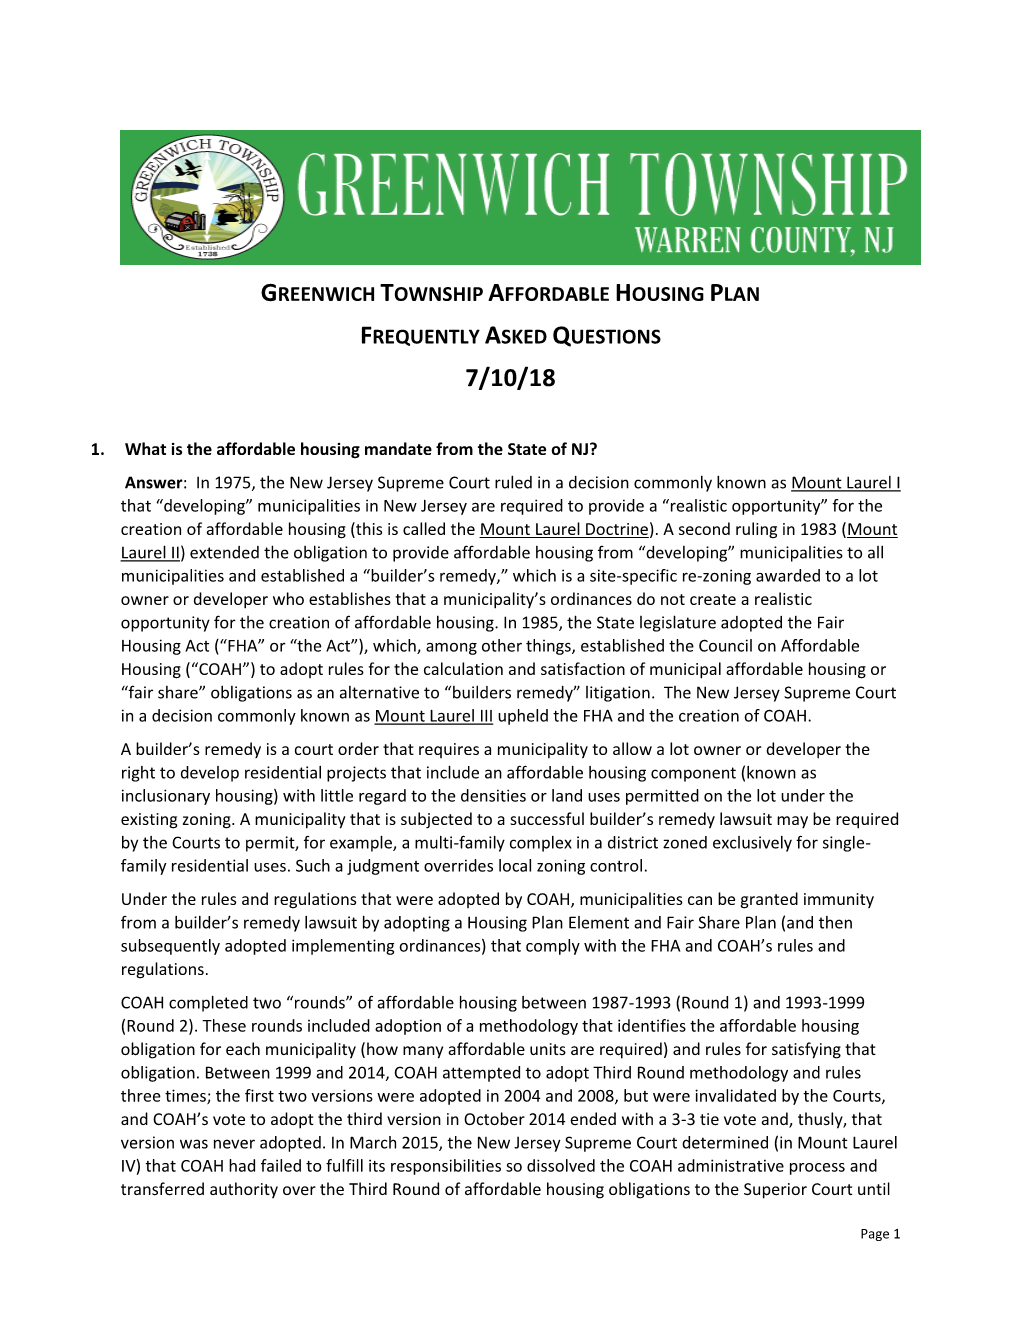 Greenwich Township Affordable Housing FAQ Ver 1 7/10/18